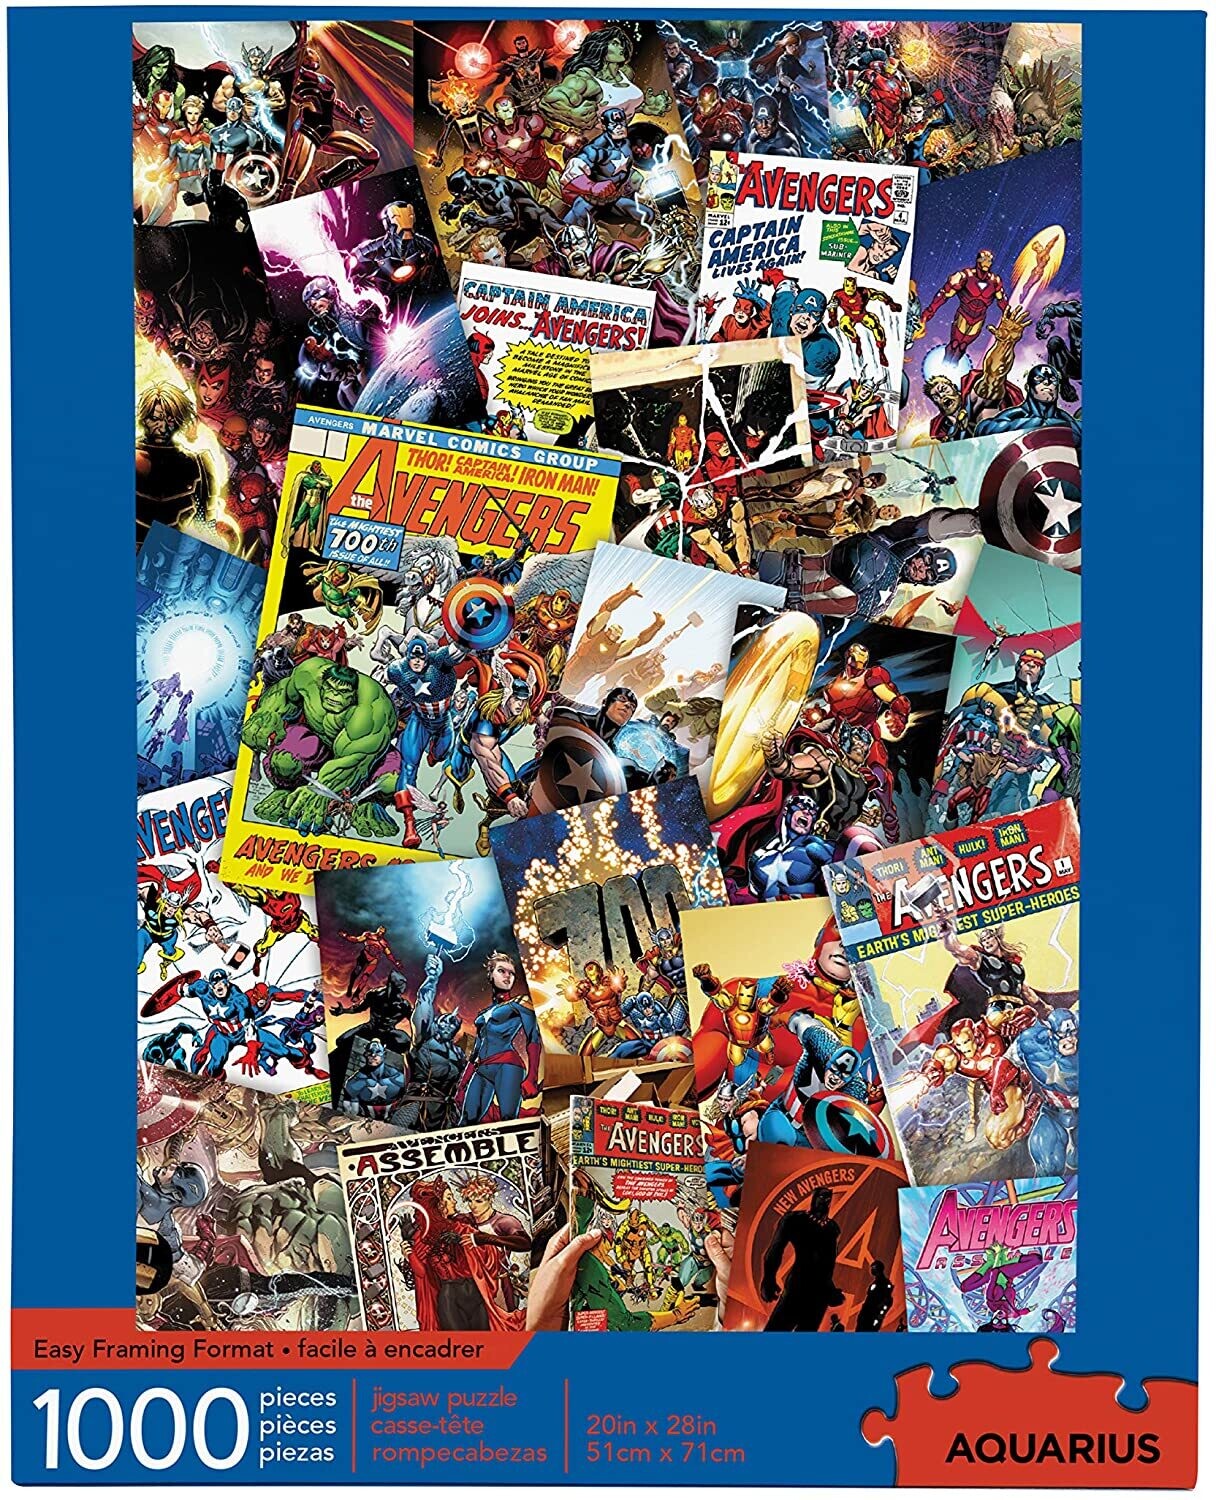 Avengers Comic Book Covers 1000 Pc